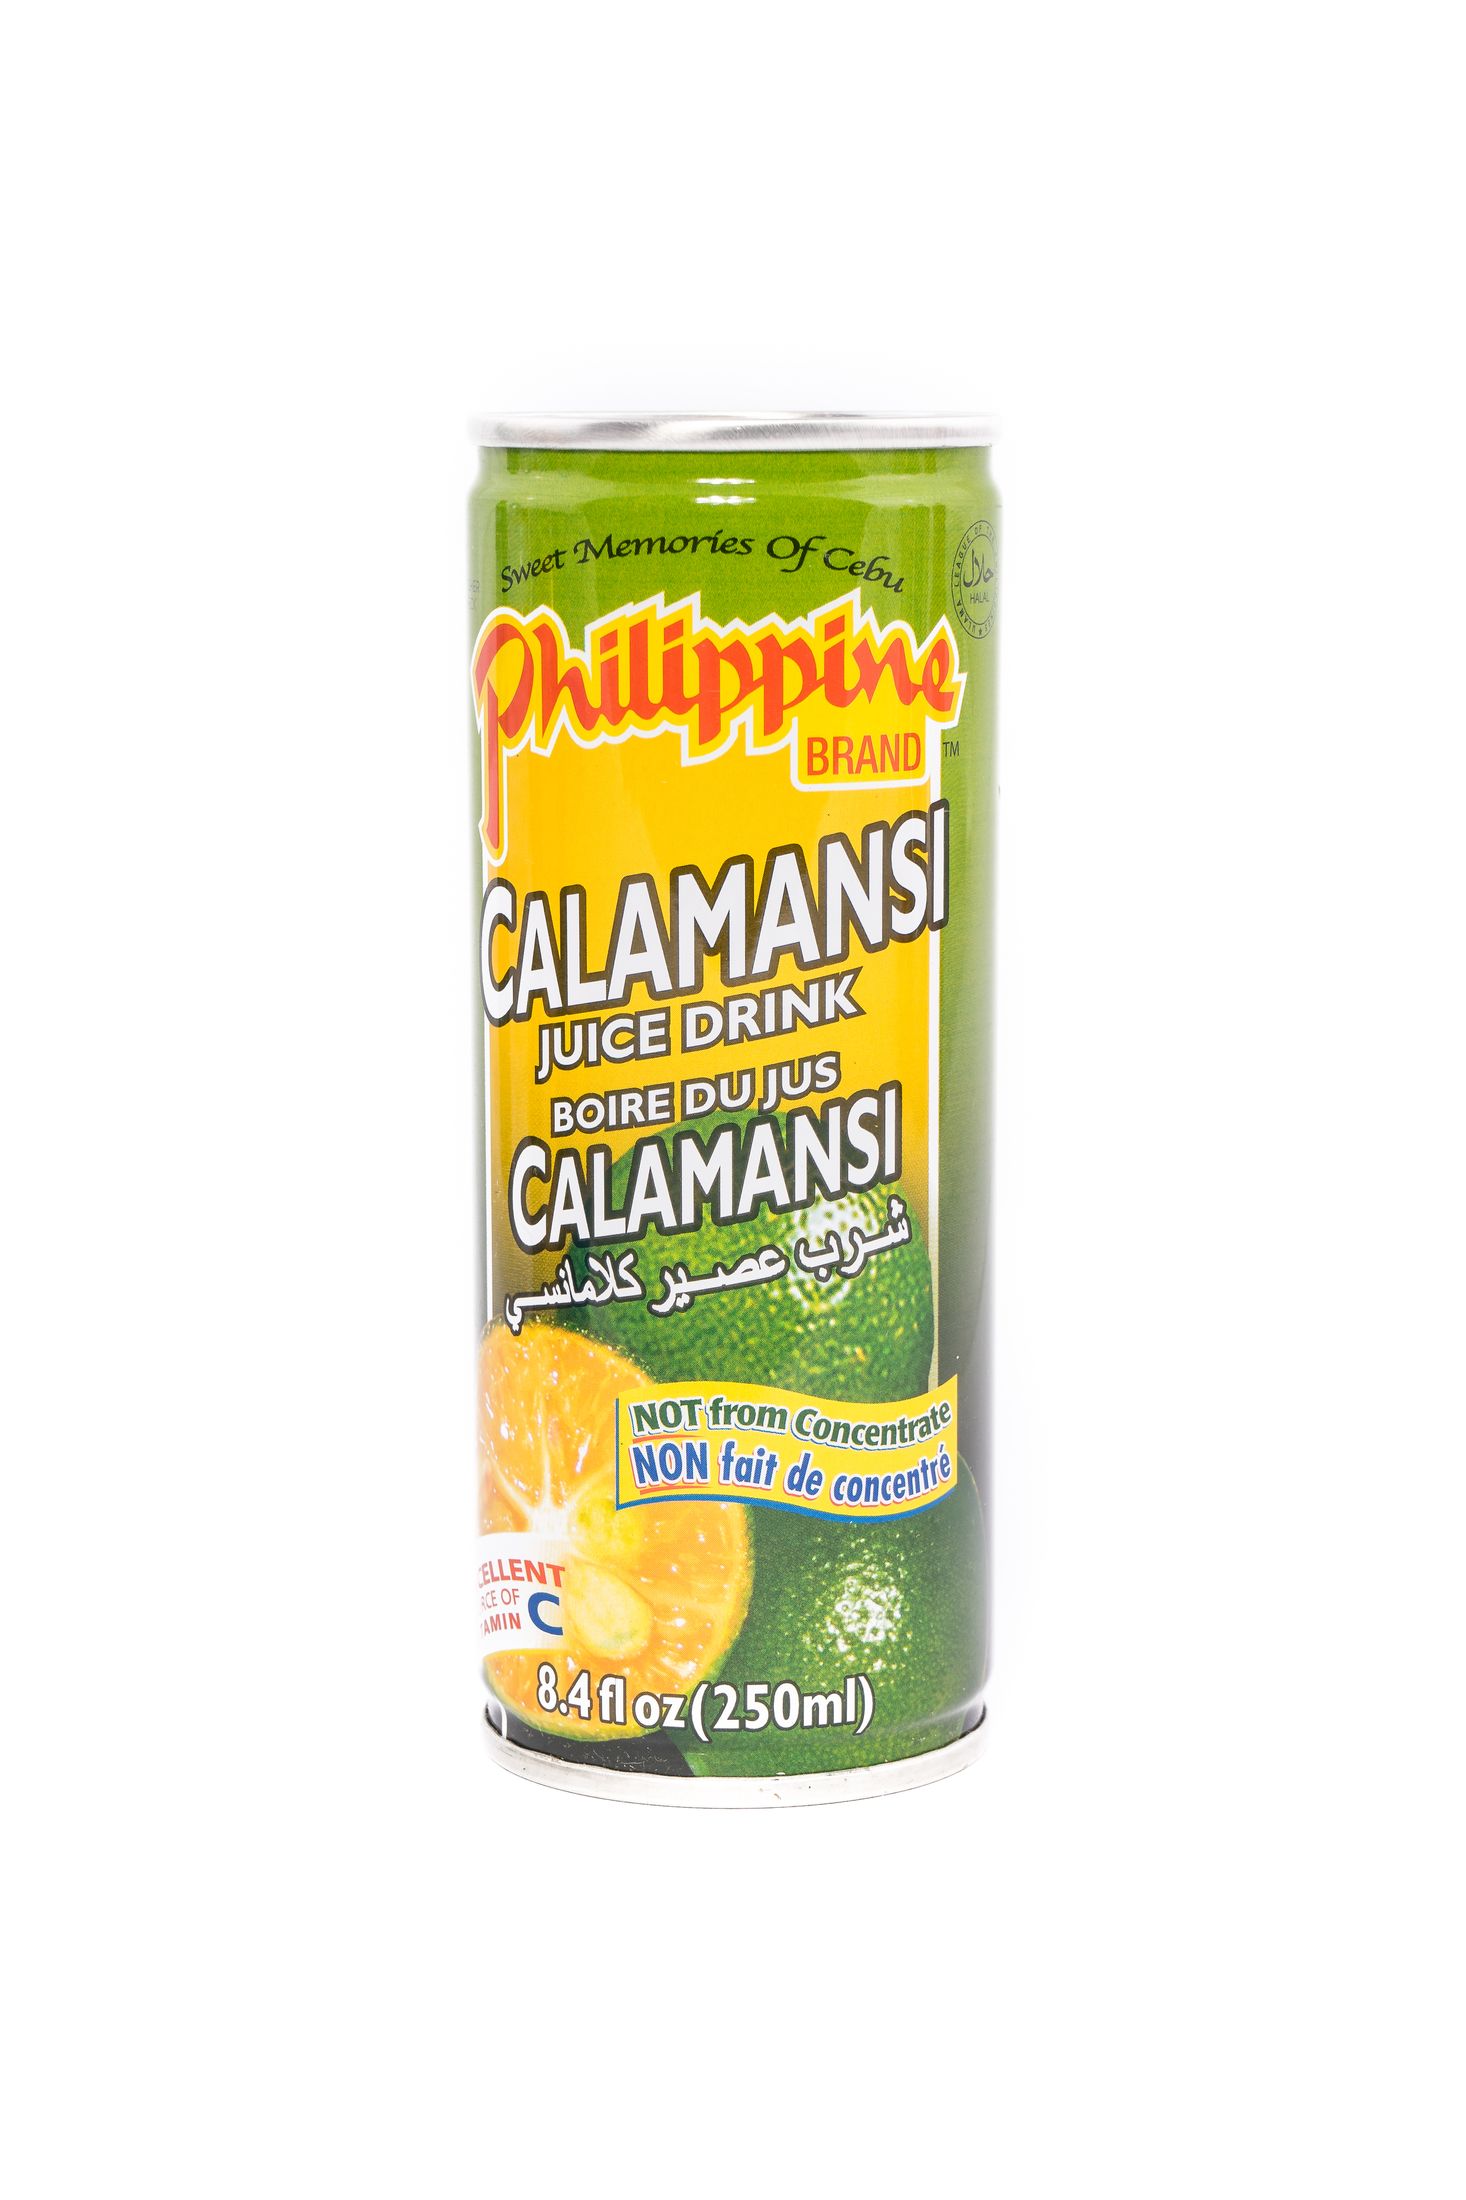 Philippine Brand Calamansi juice drink